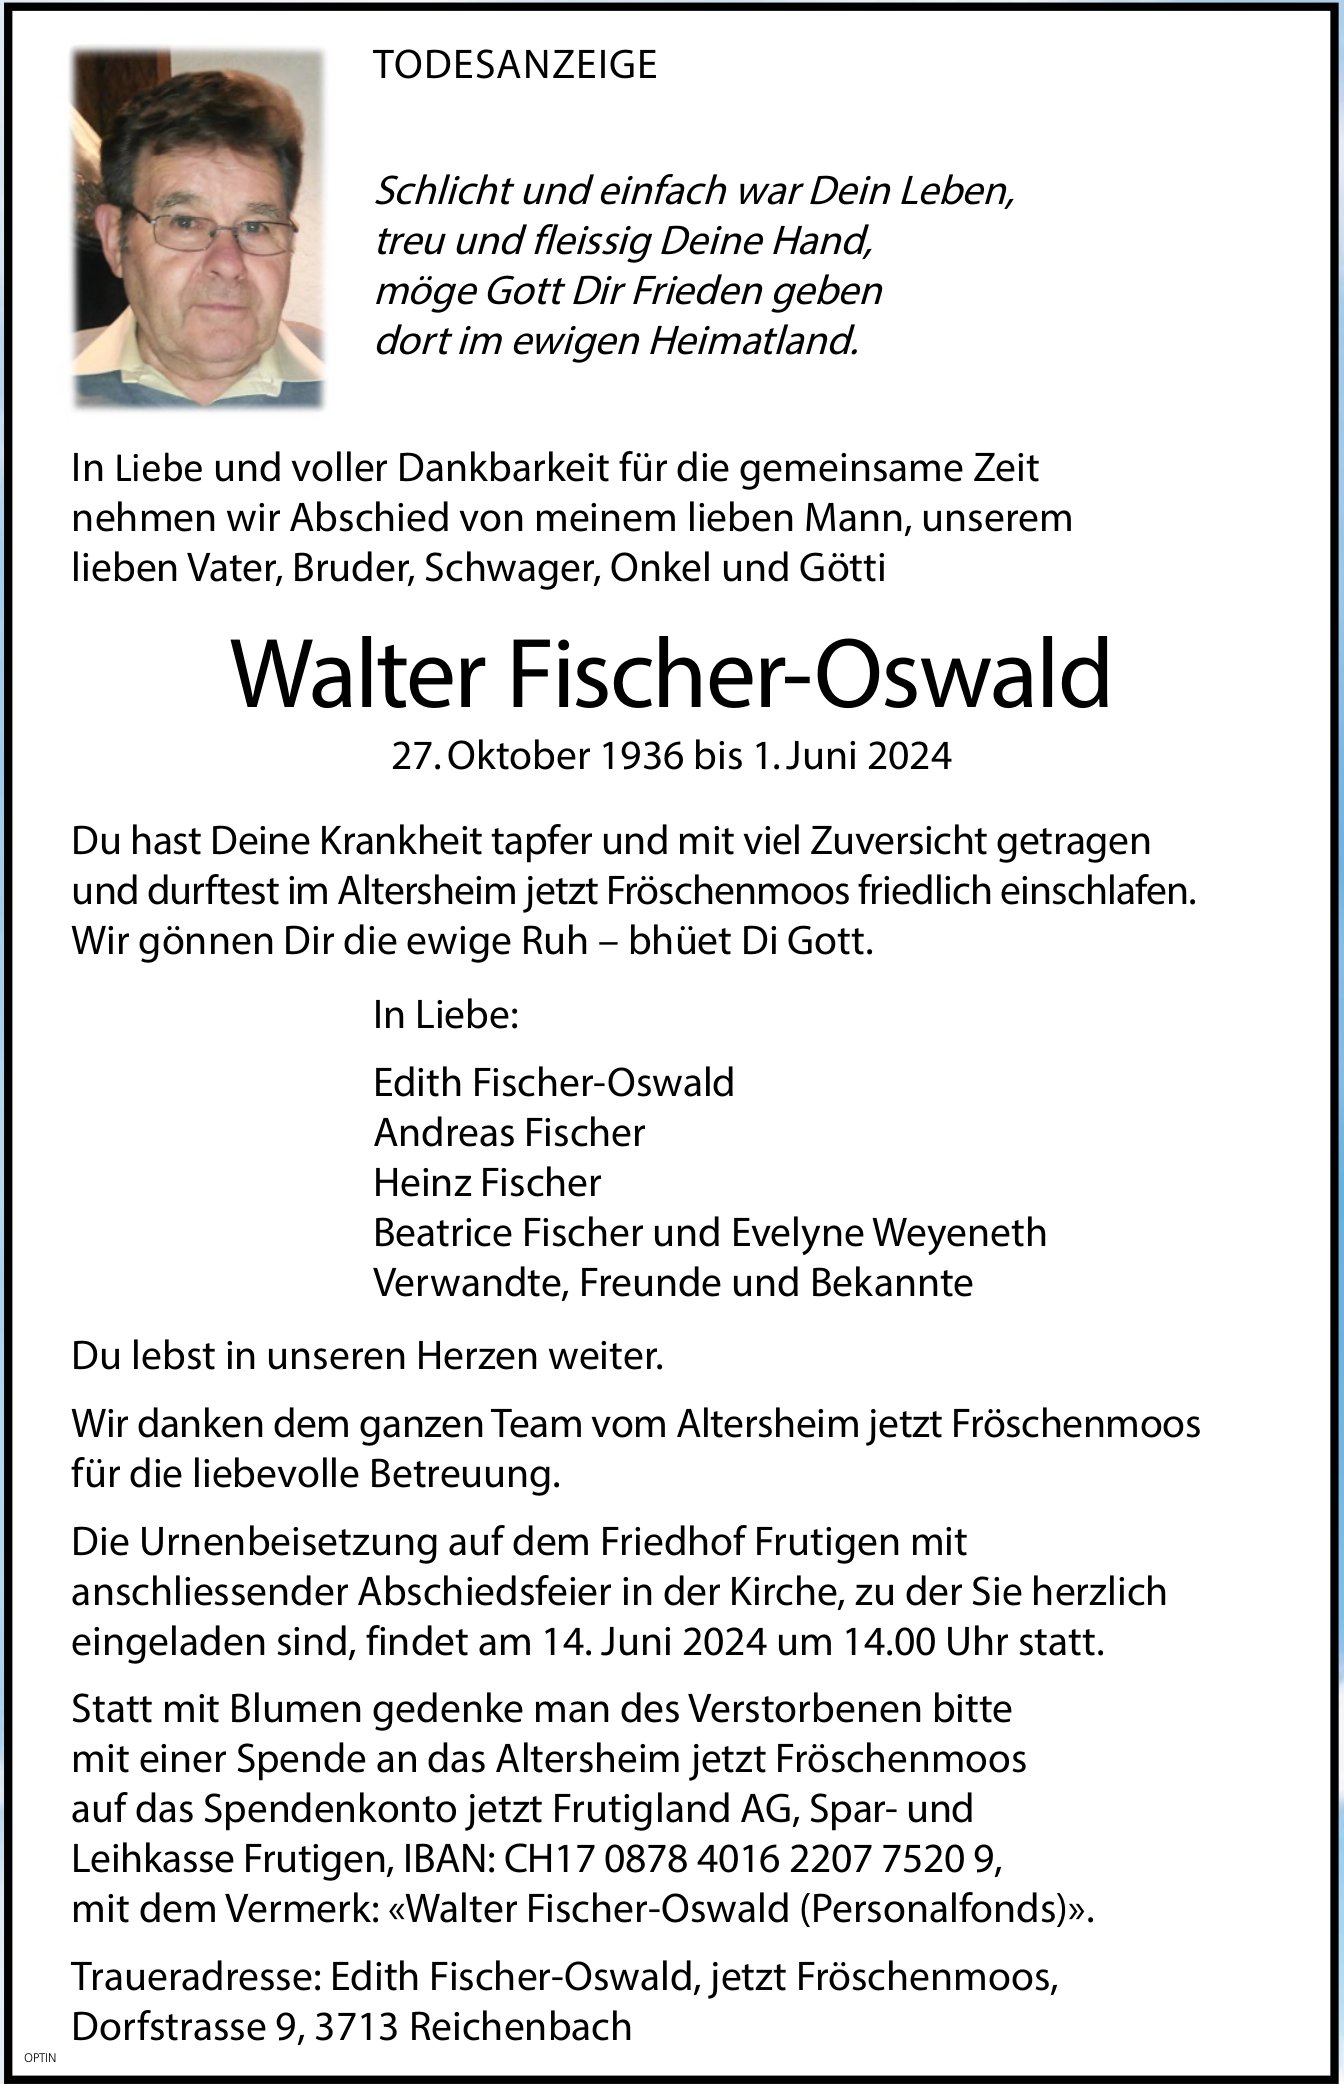 Walter Fischer-Oswald, Juni 2024 / TA